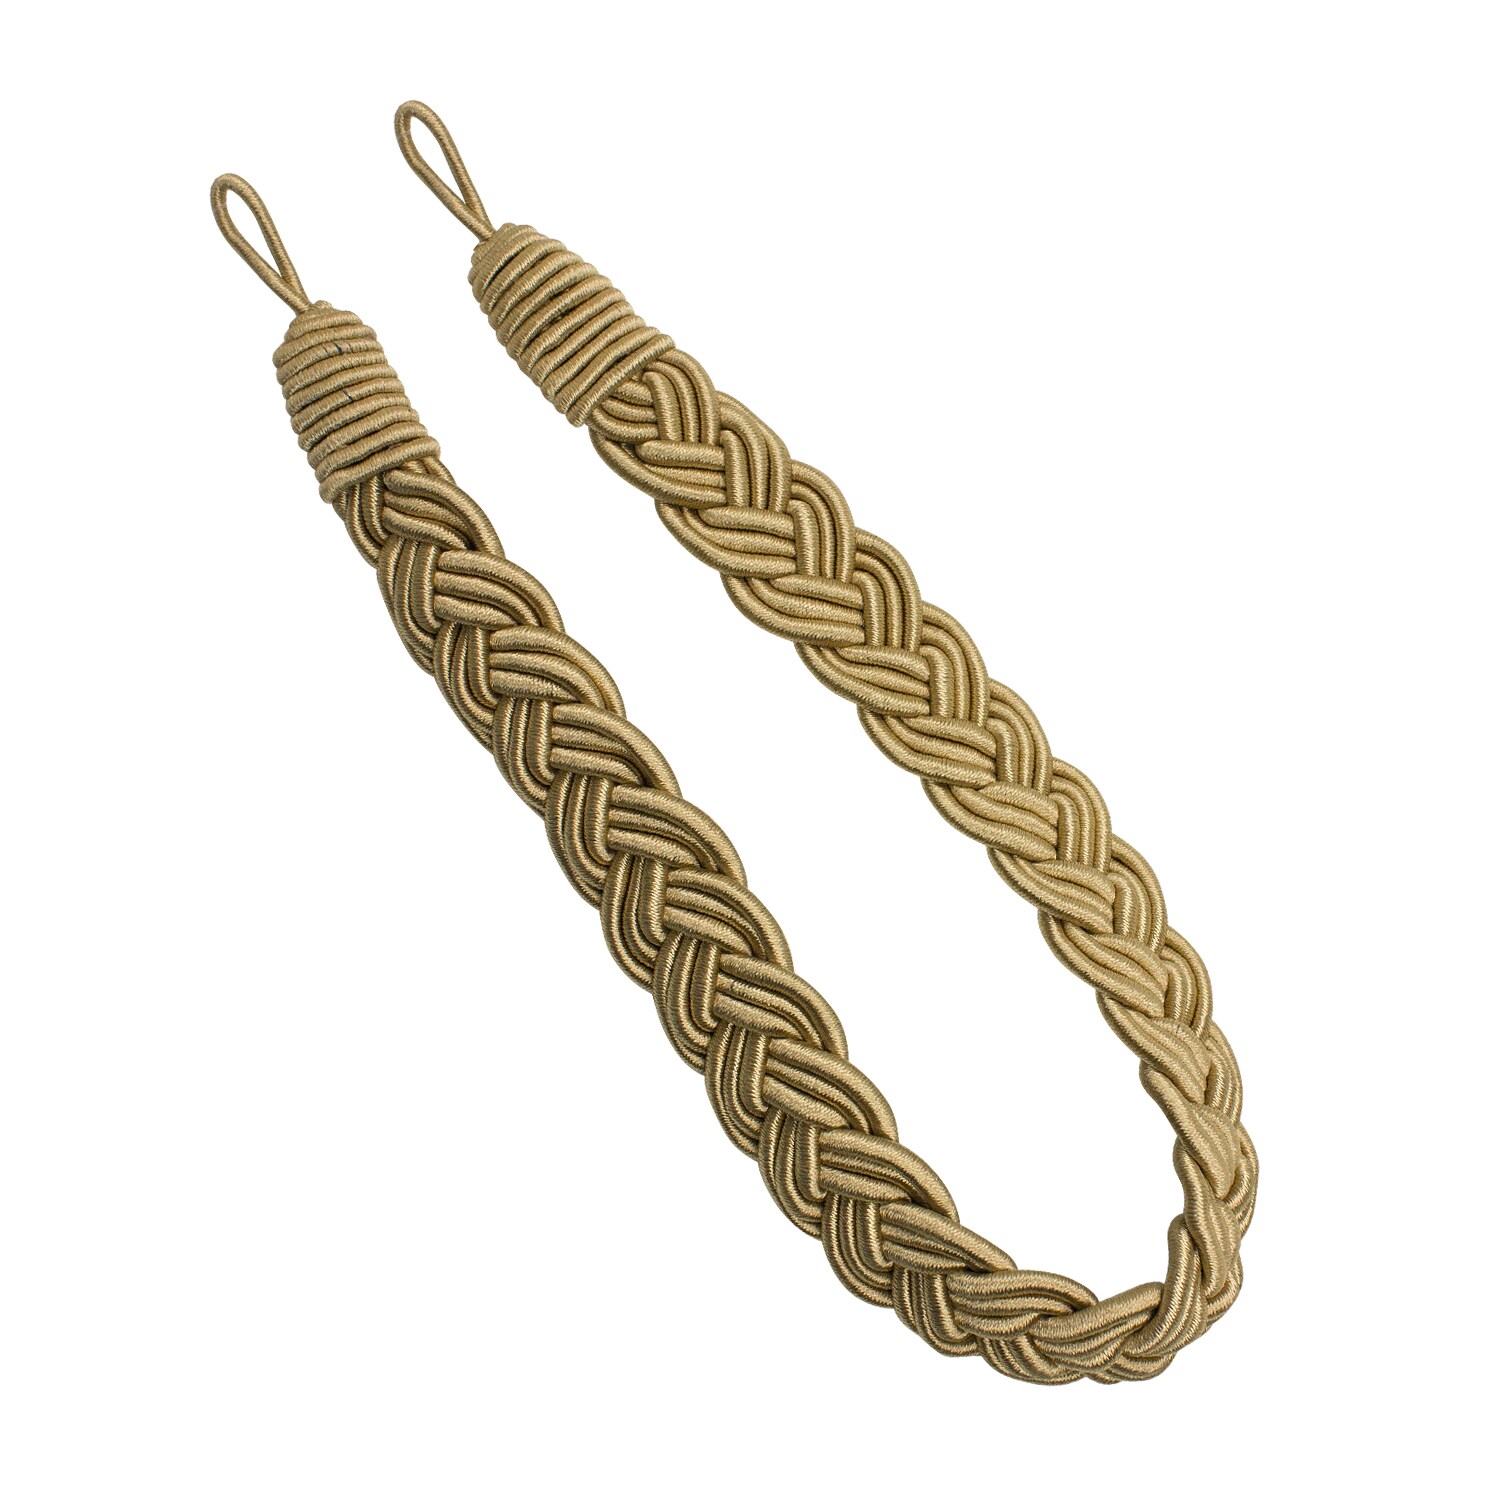 4 X SELF ADHESIVE Gold Curtain Tie Back Hooks Stick On Tassel/Rope/Cord Holder 